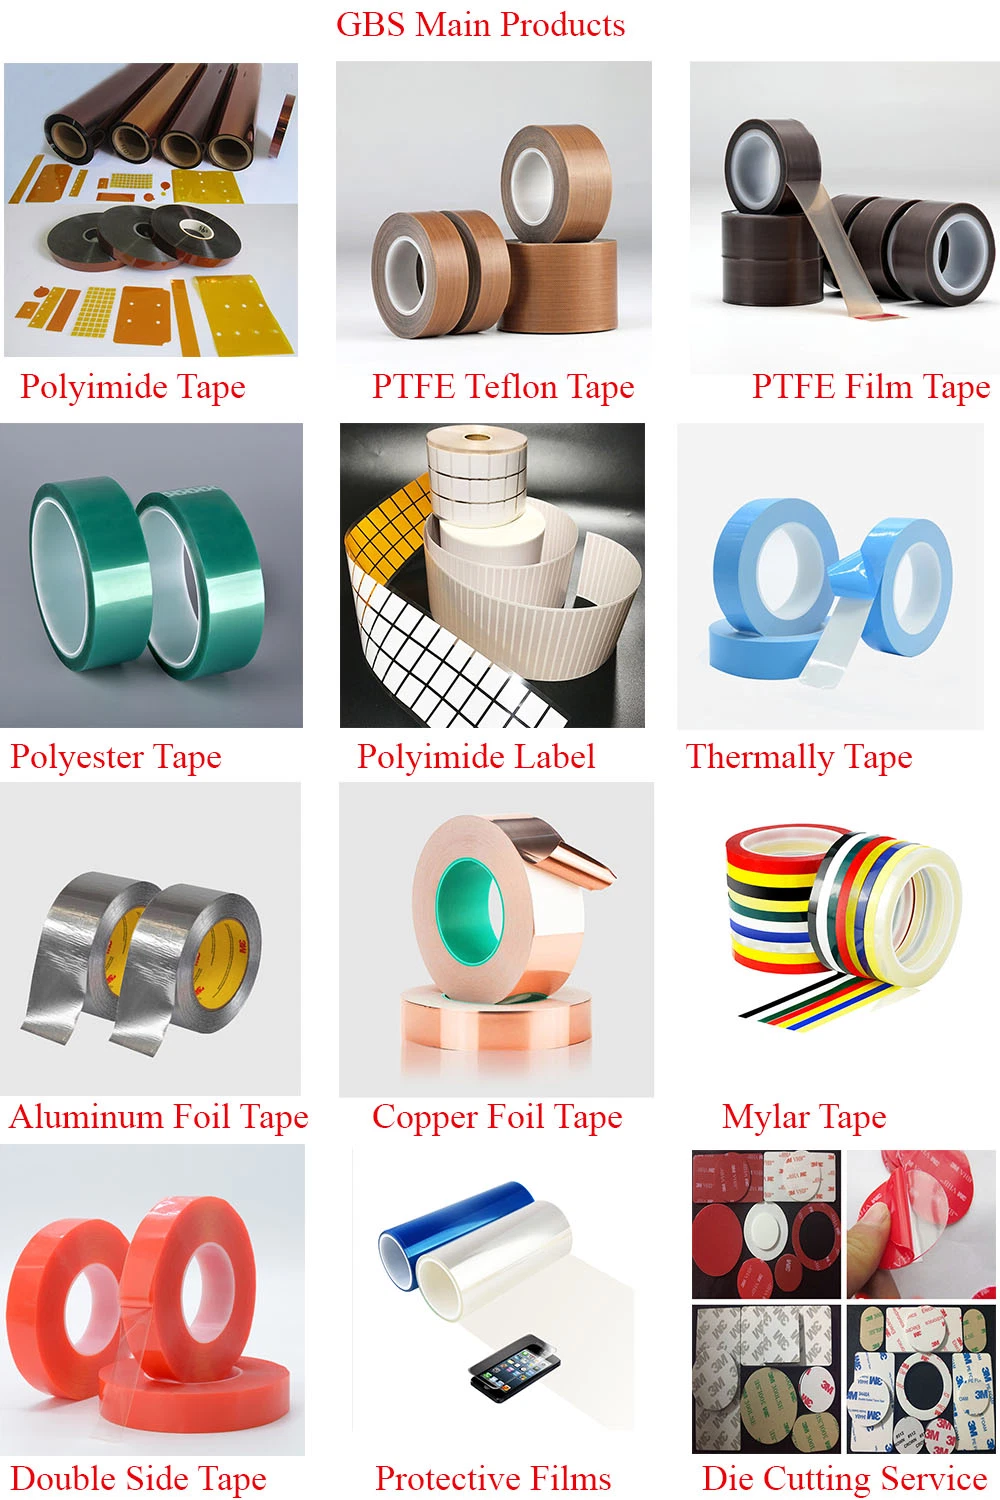 Rogers Poron 4701-40 Polyurethane PU Soft Foam Tape for Automotive Gasket and Sealing